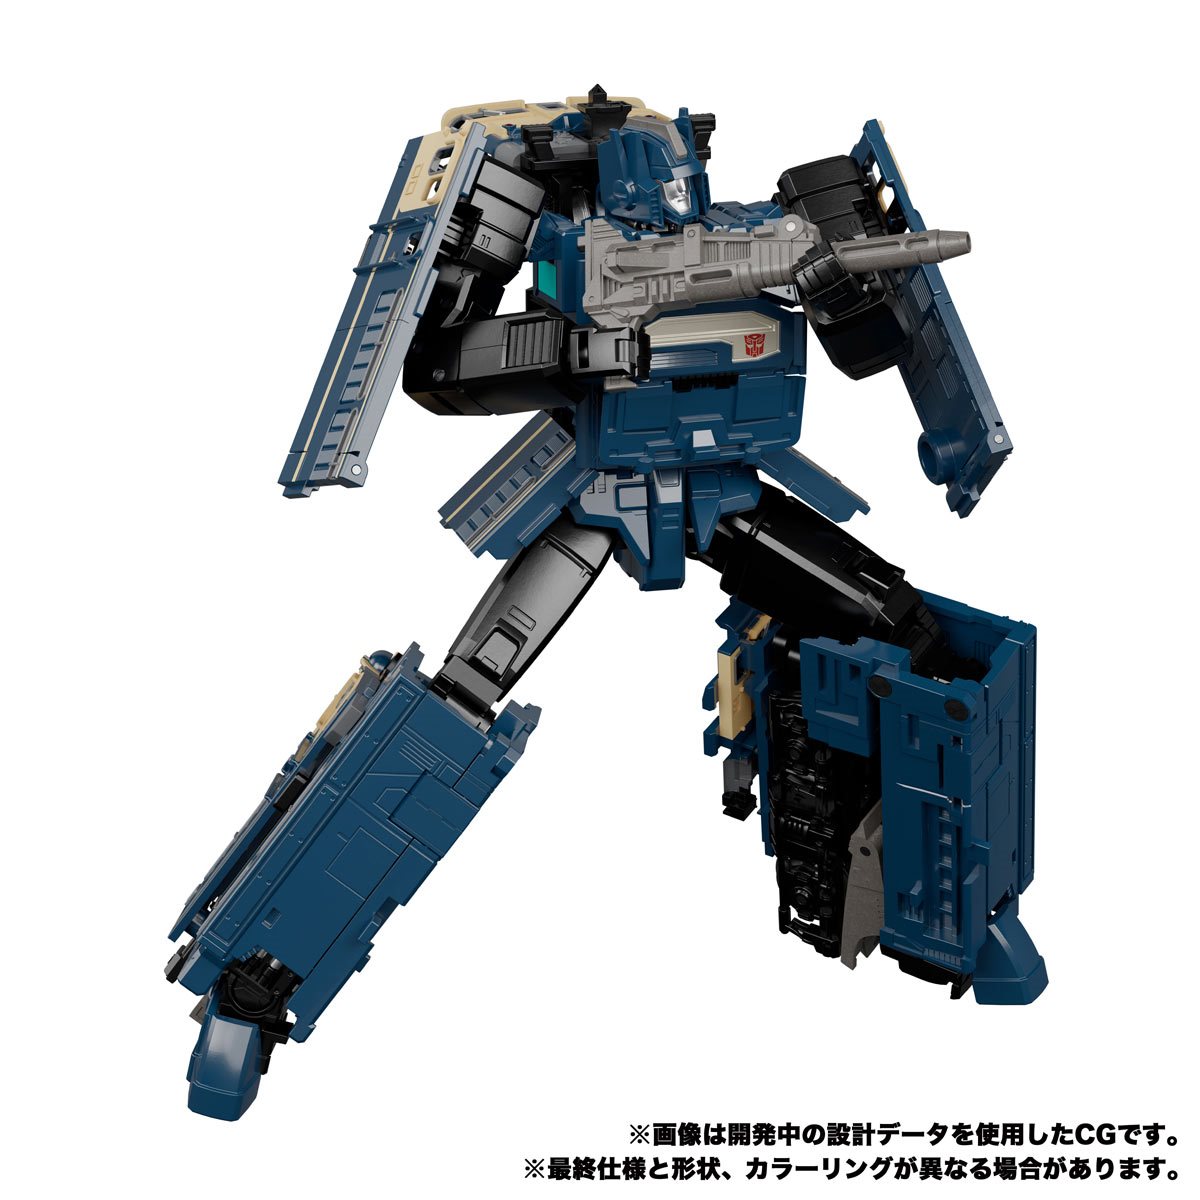 2020-02-24 - Pochete Transformer